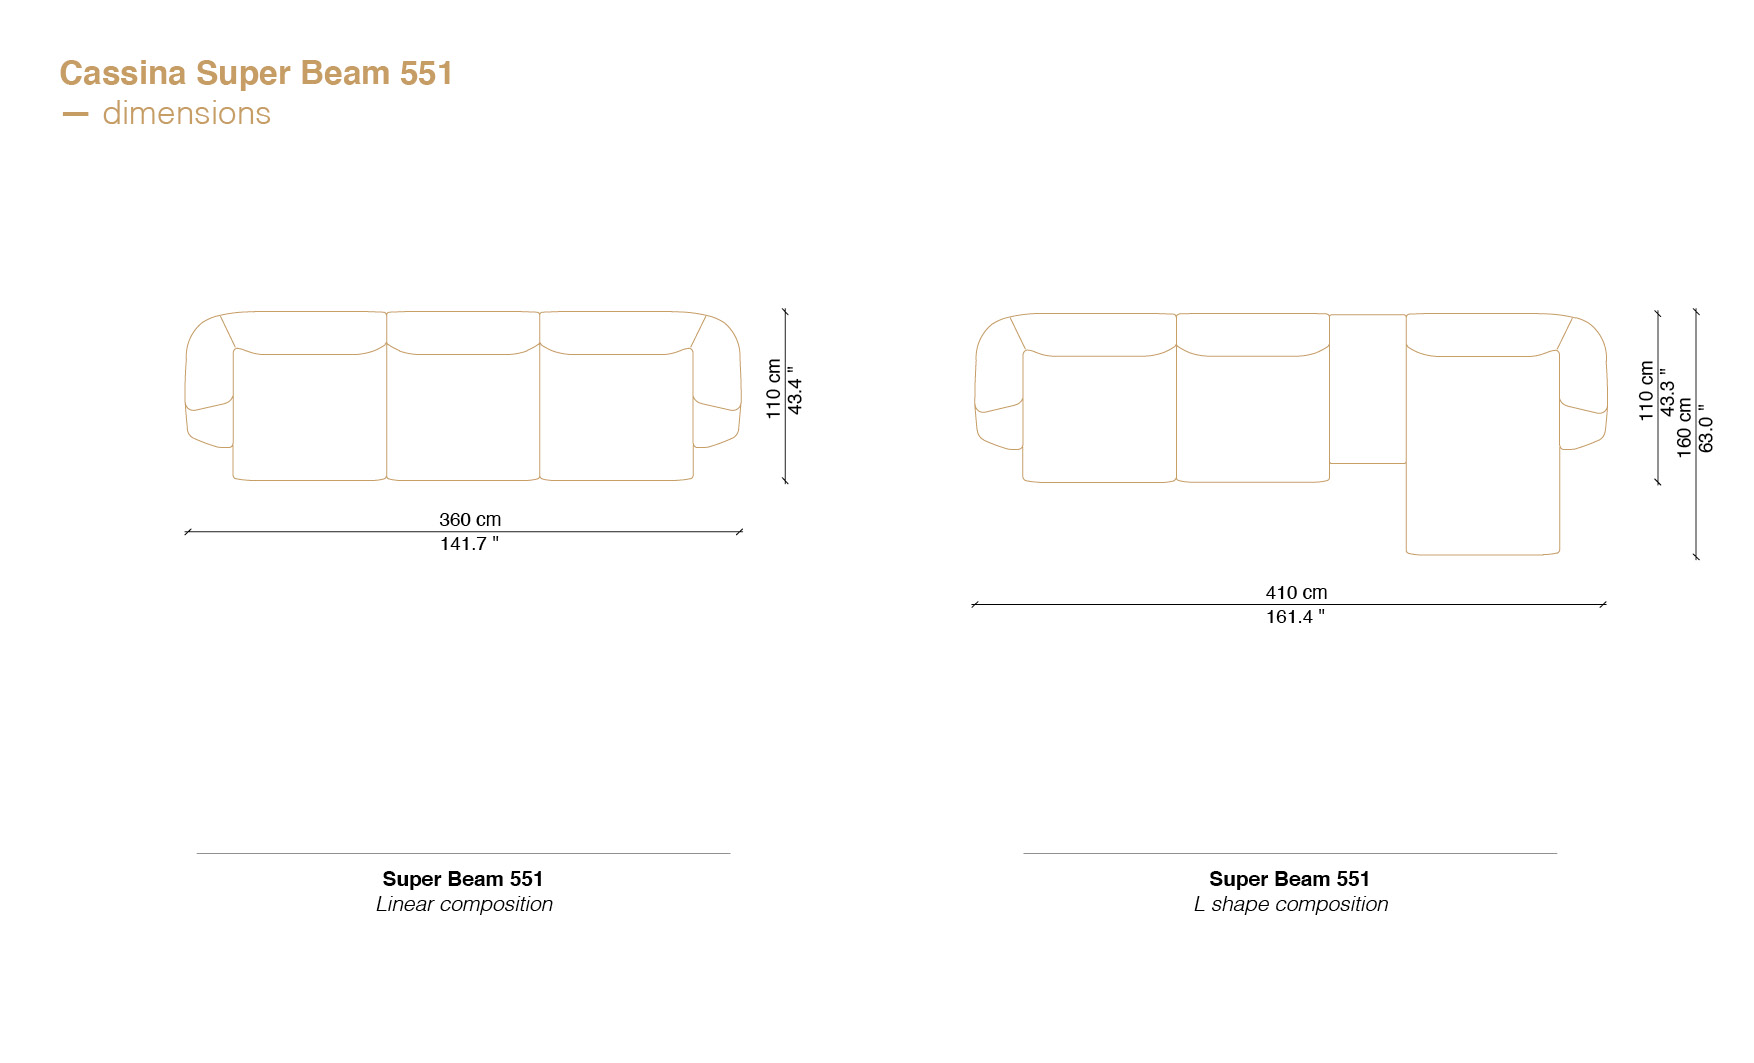 super beam sofa dimensions and Cassina sofa price